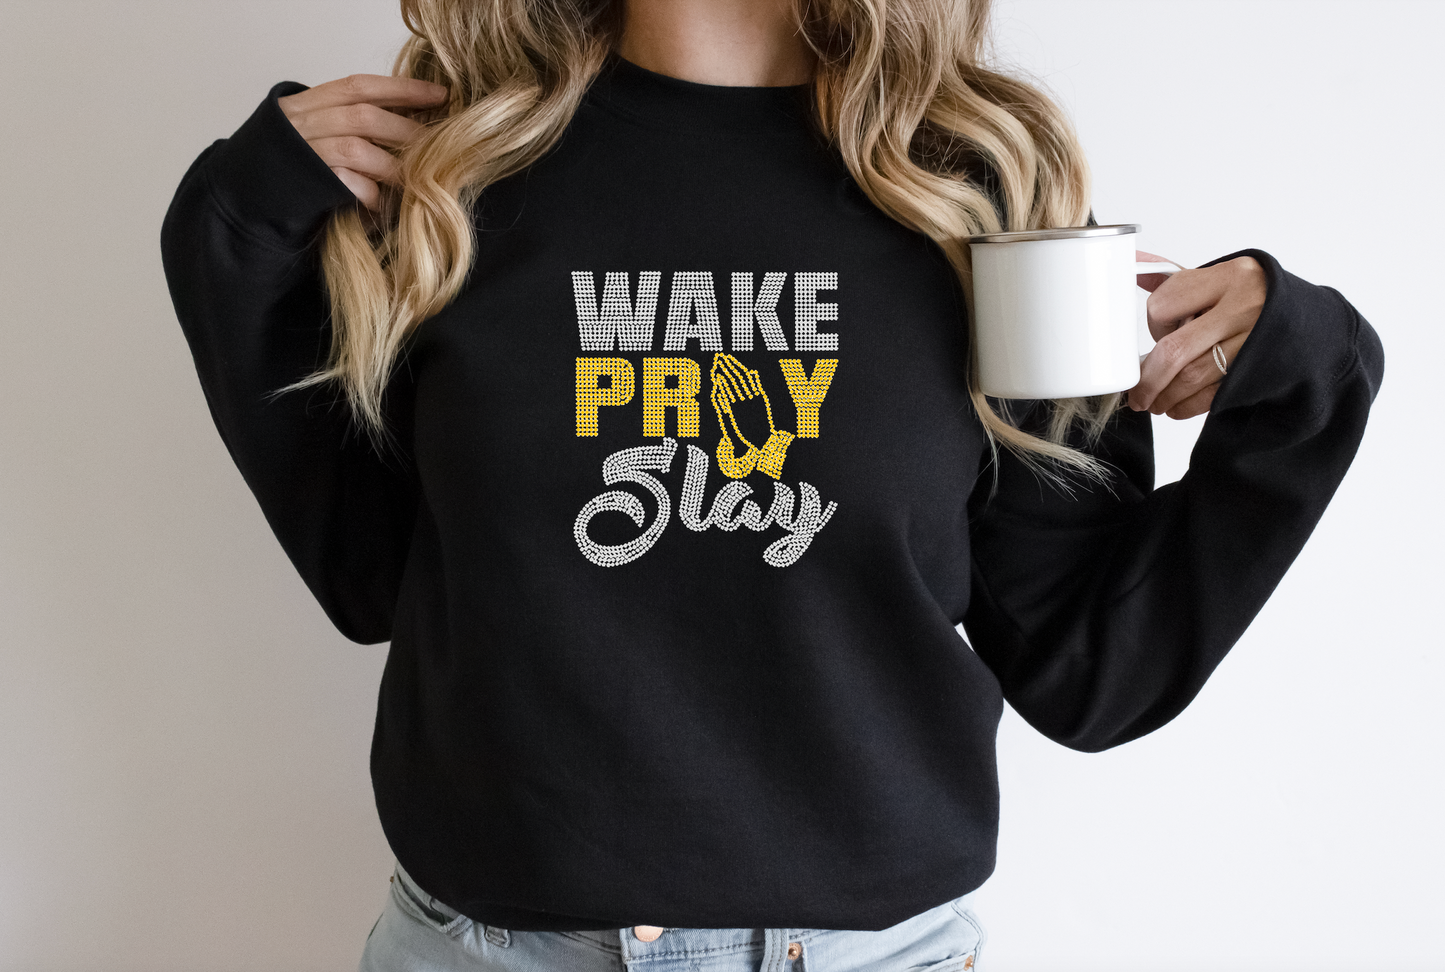 Wake Pray Slay Rhinestone hoodies/sweatshirts